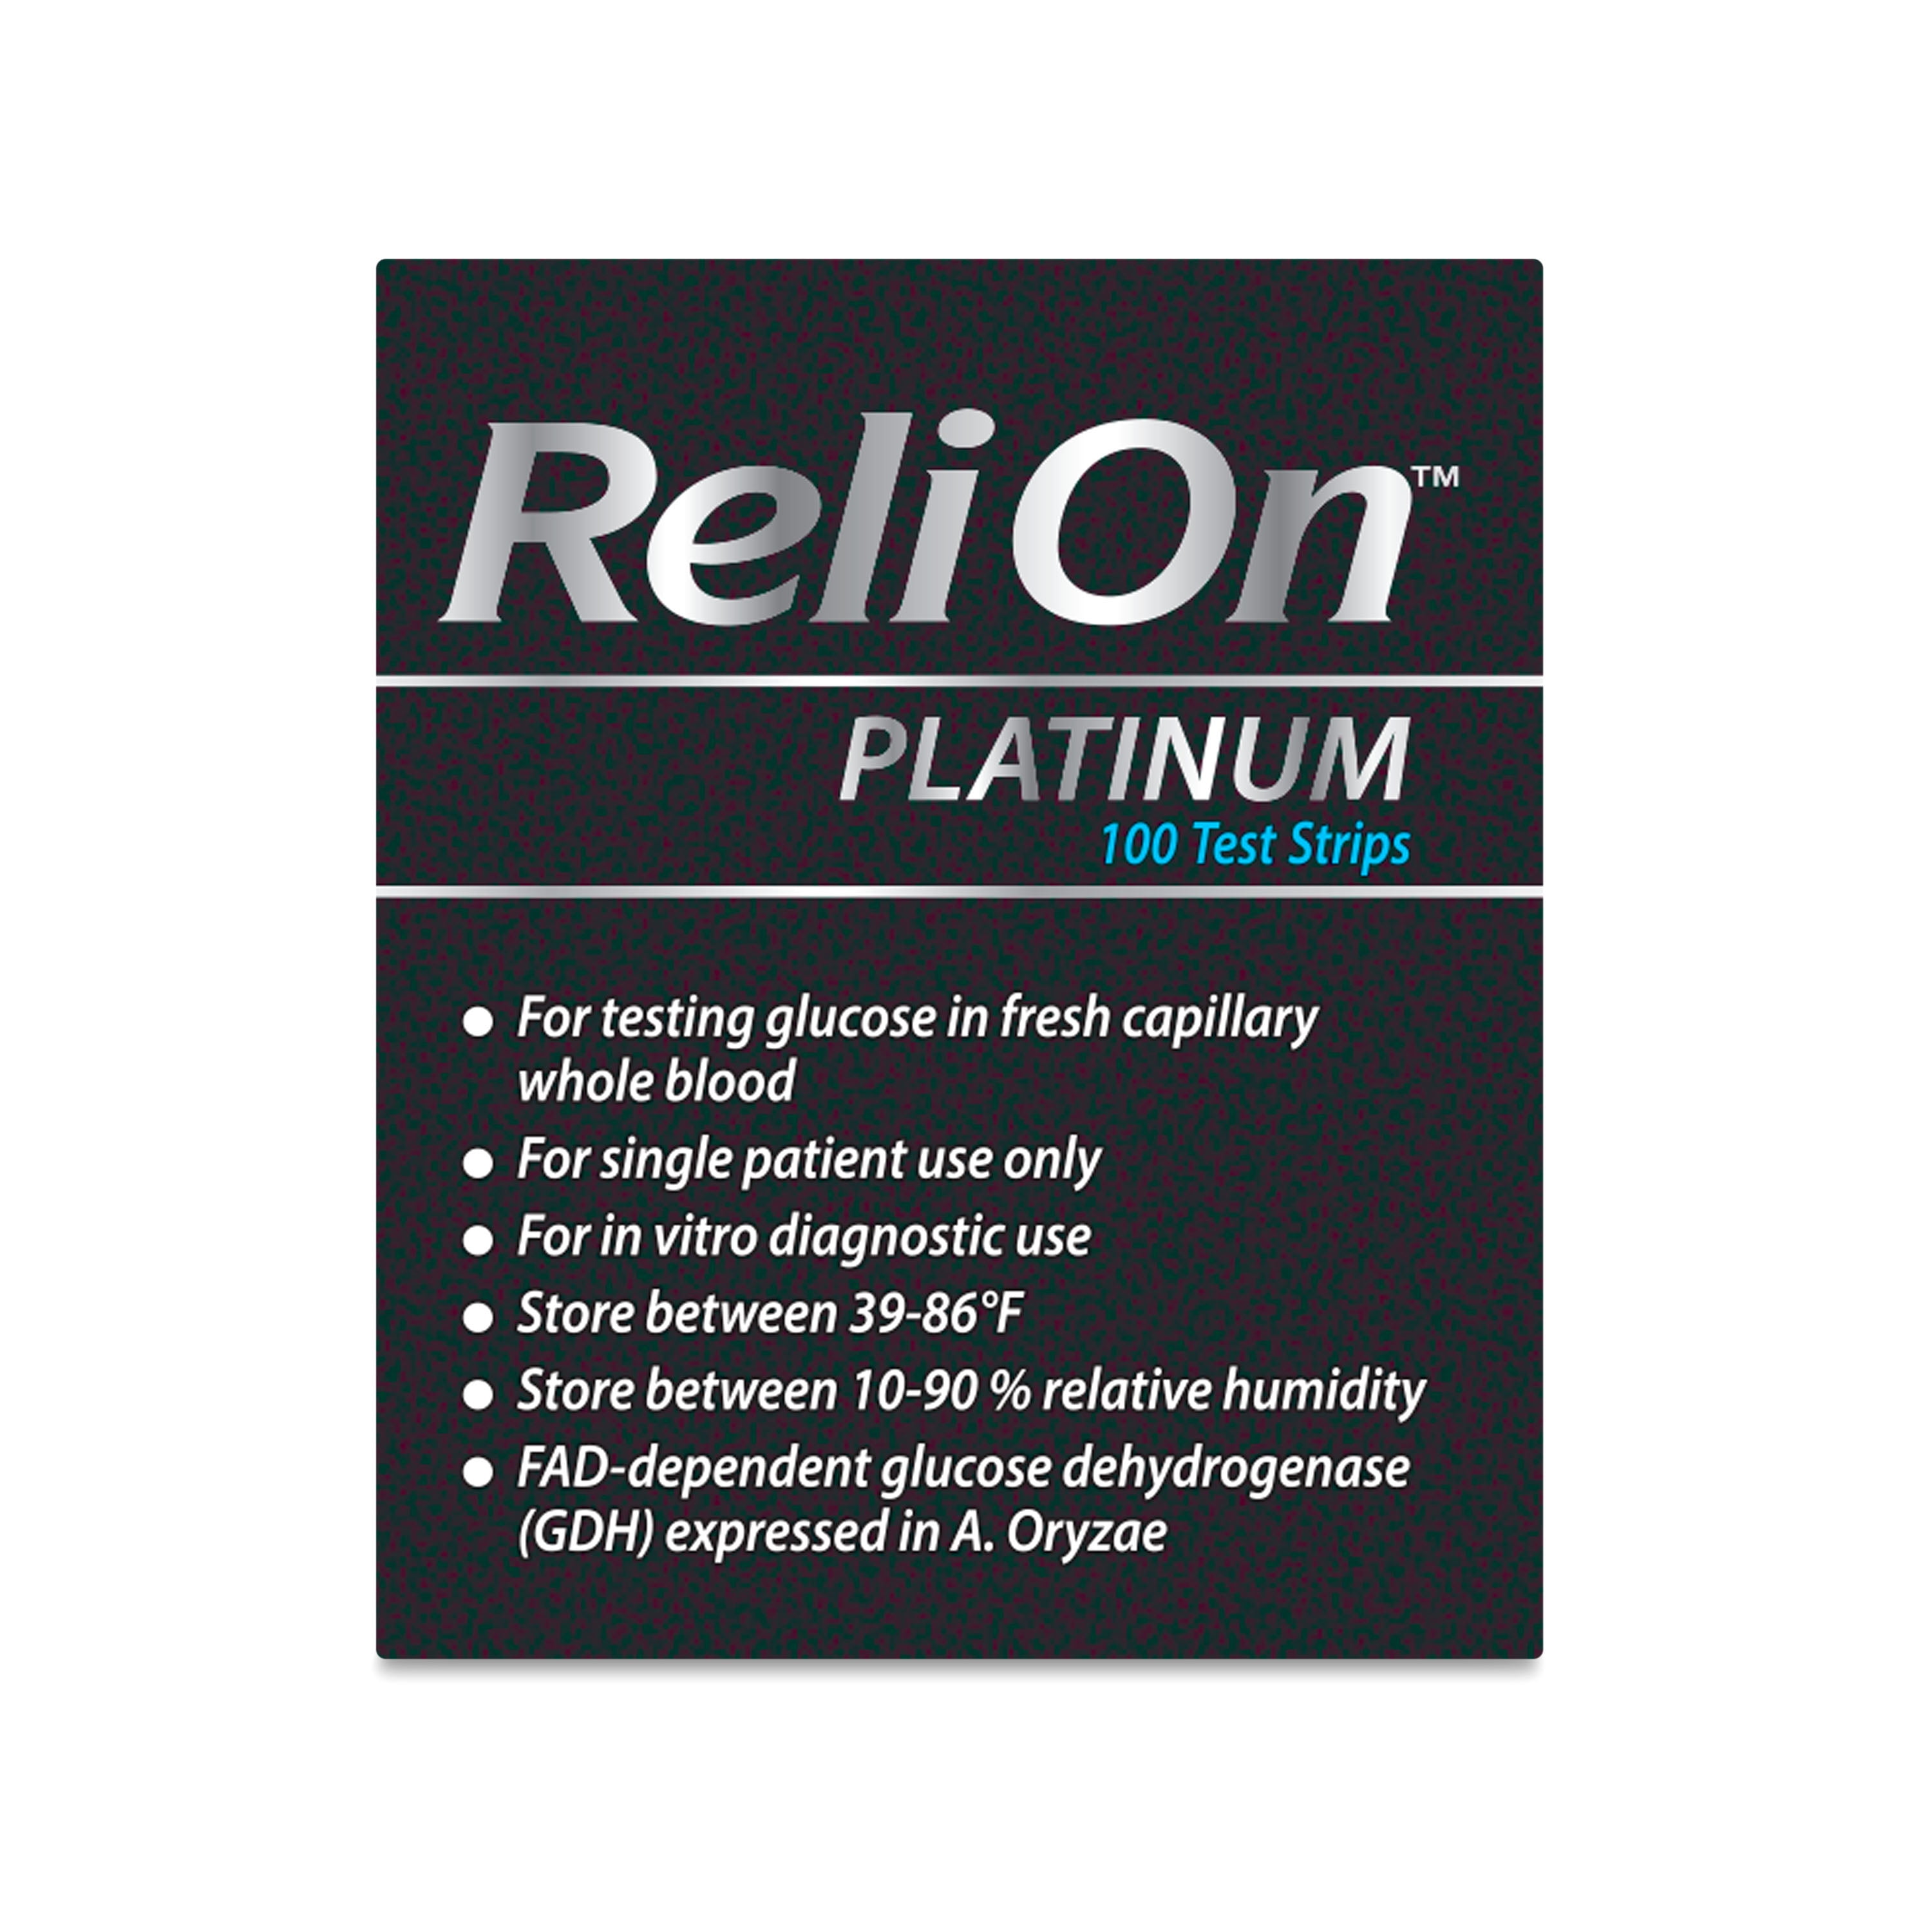 Relion Platinum Blood Glucose Monitoring System, Size: 1